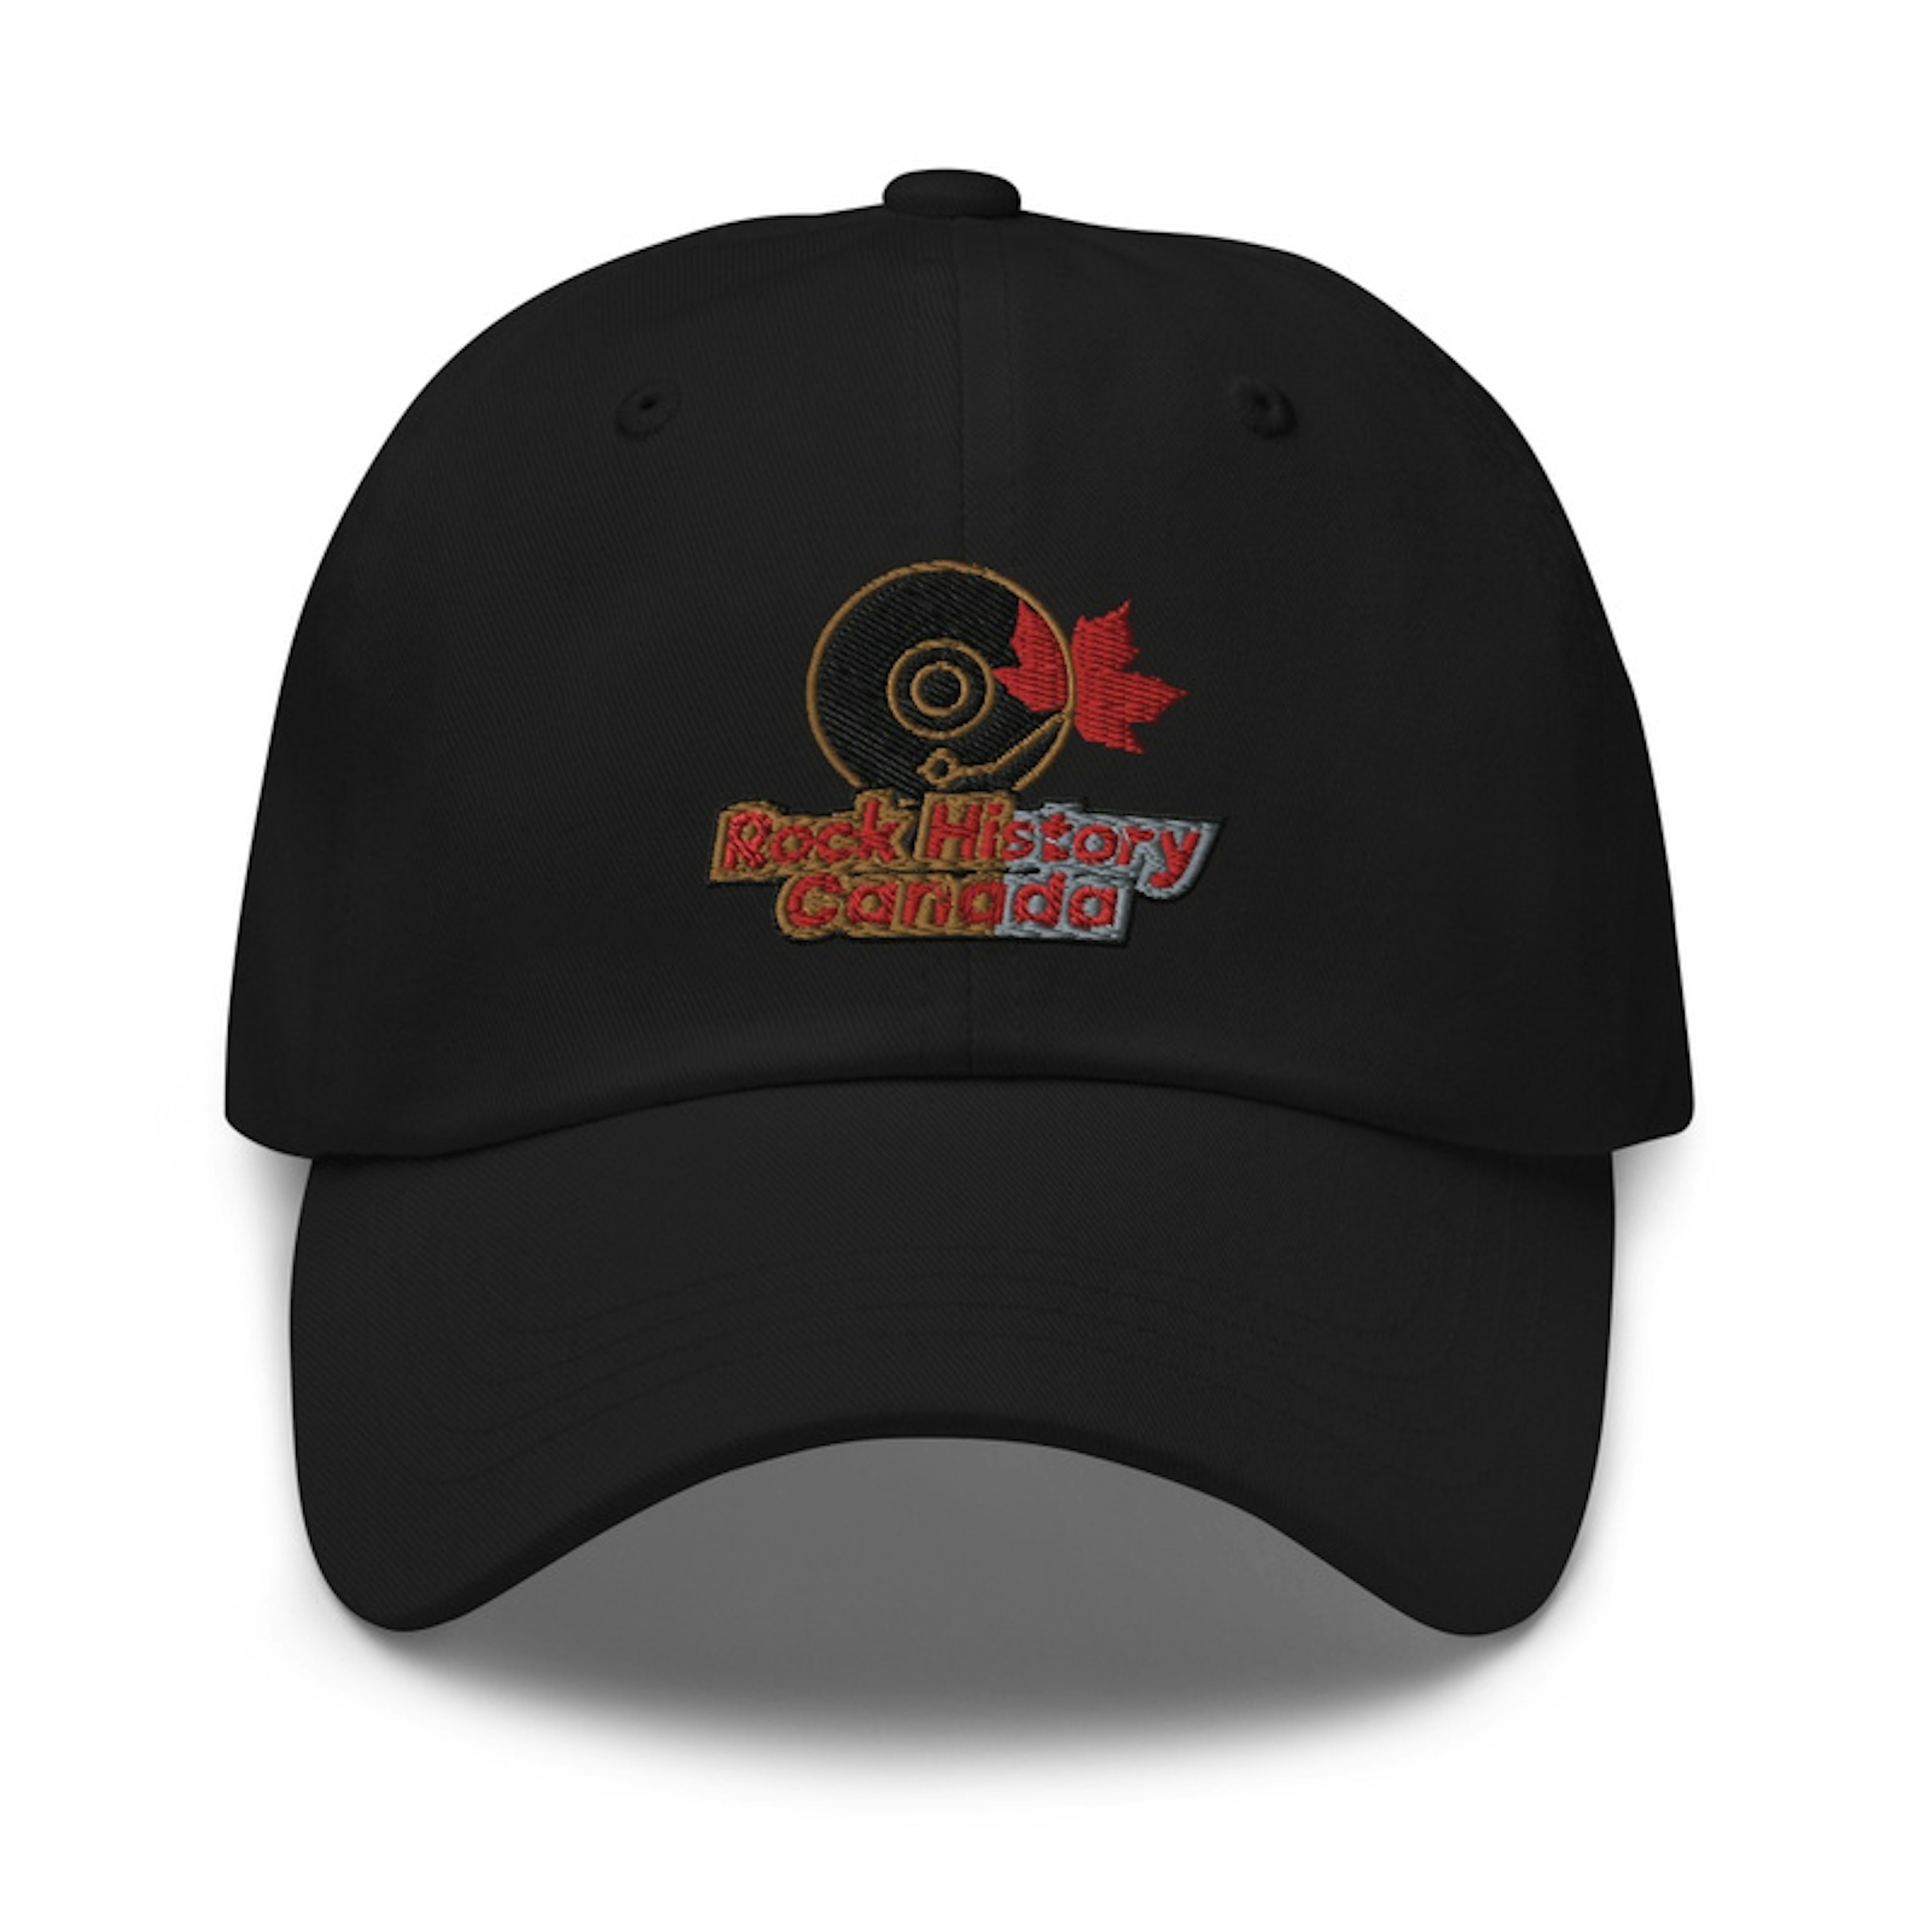 "Rock History Canada" baseball cap